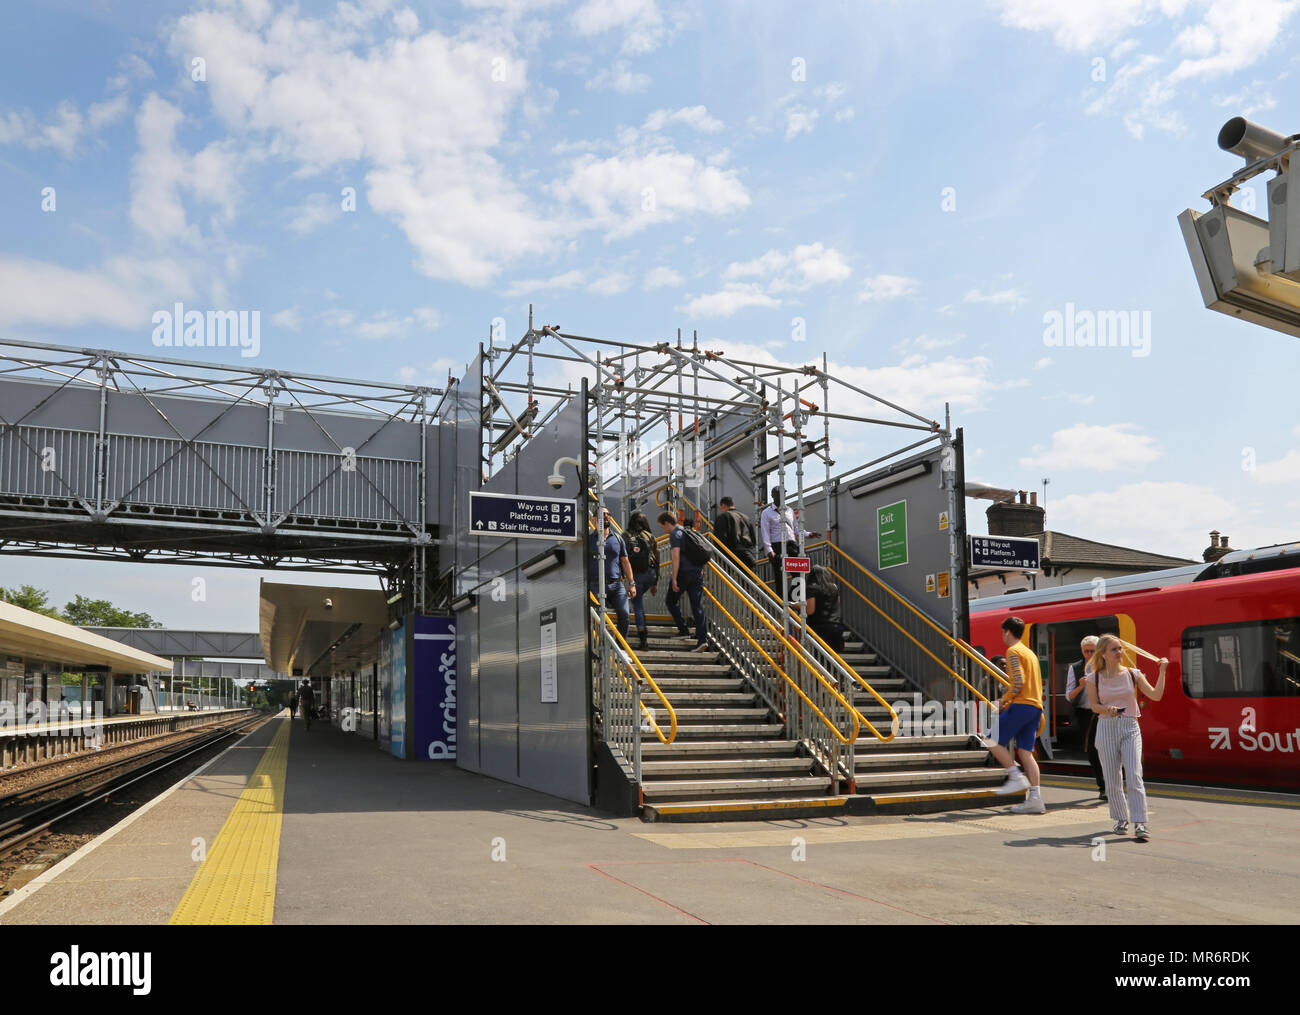 A temporary footbridge provides access between platforms at Twickenham railway station in West London, UK Stock Photo